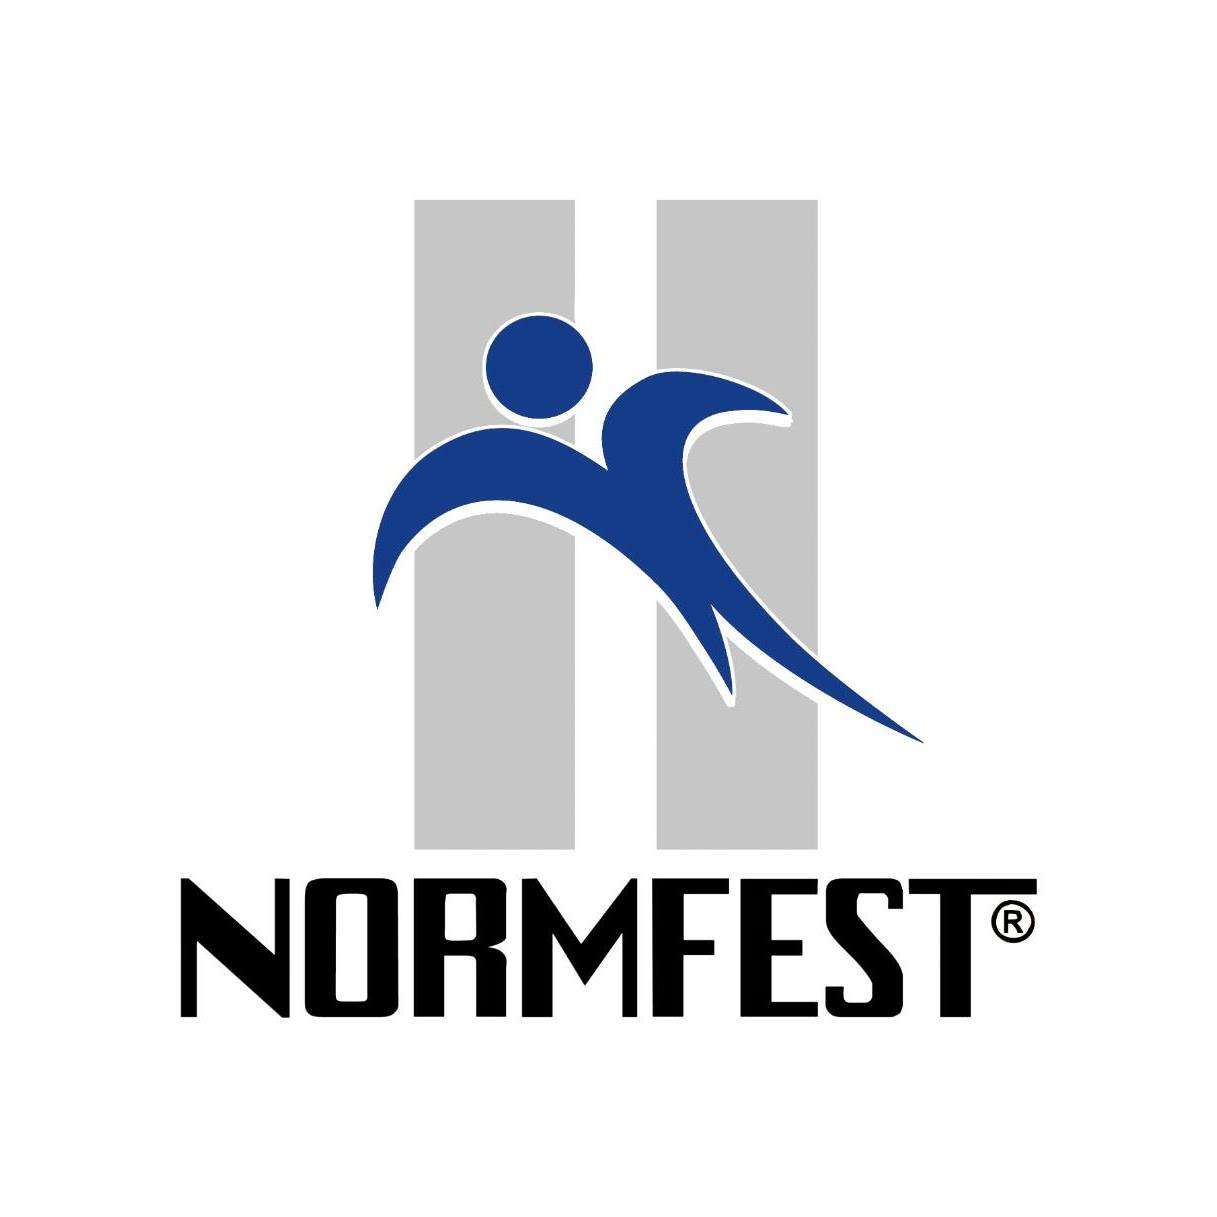 Normfest - Crunchbase Company Profile & Funding